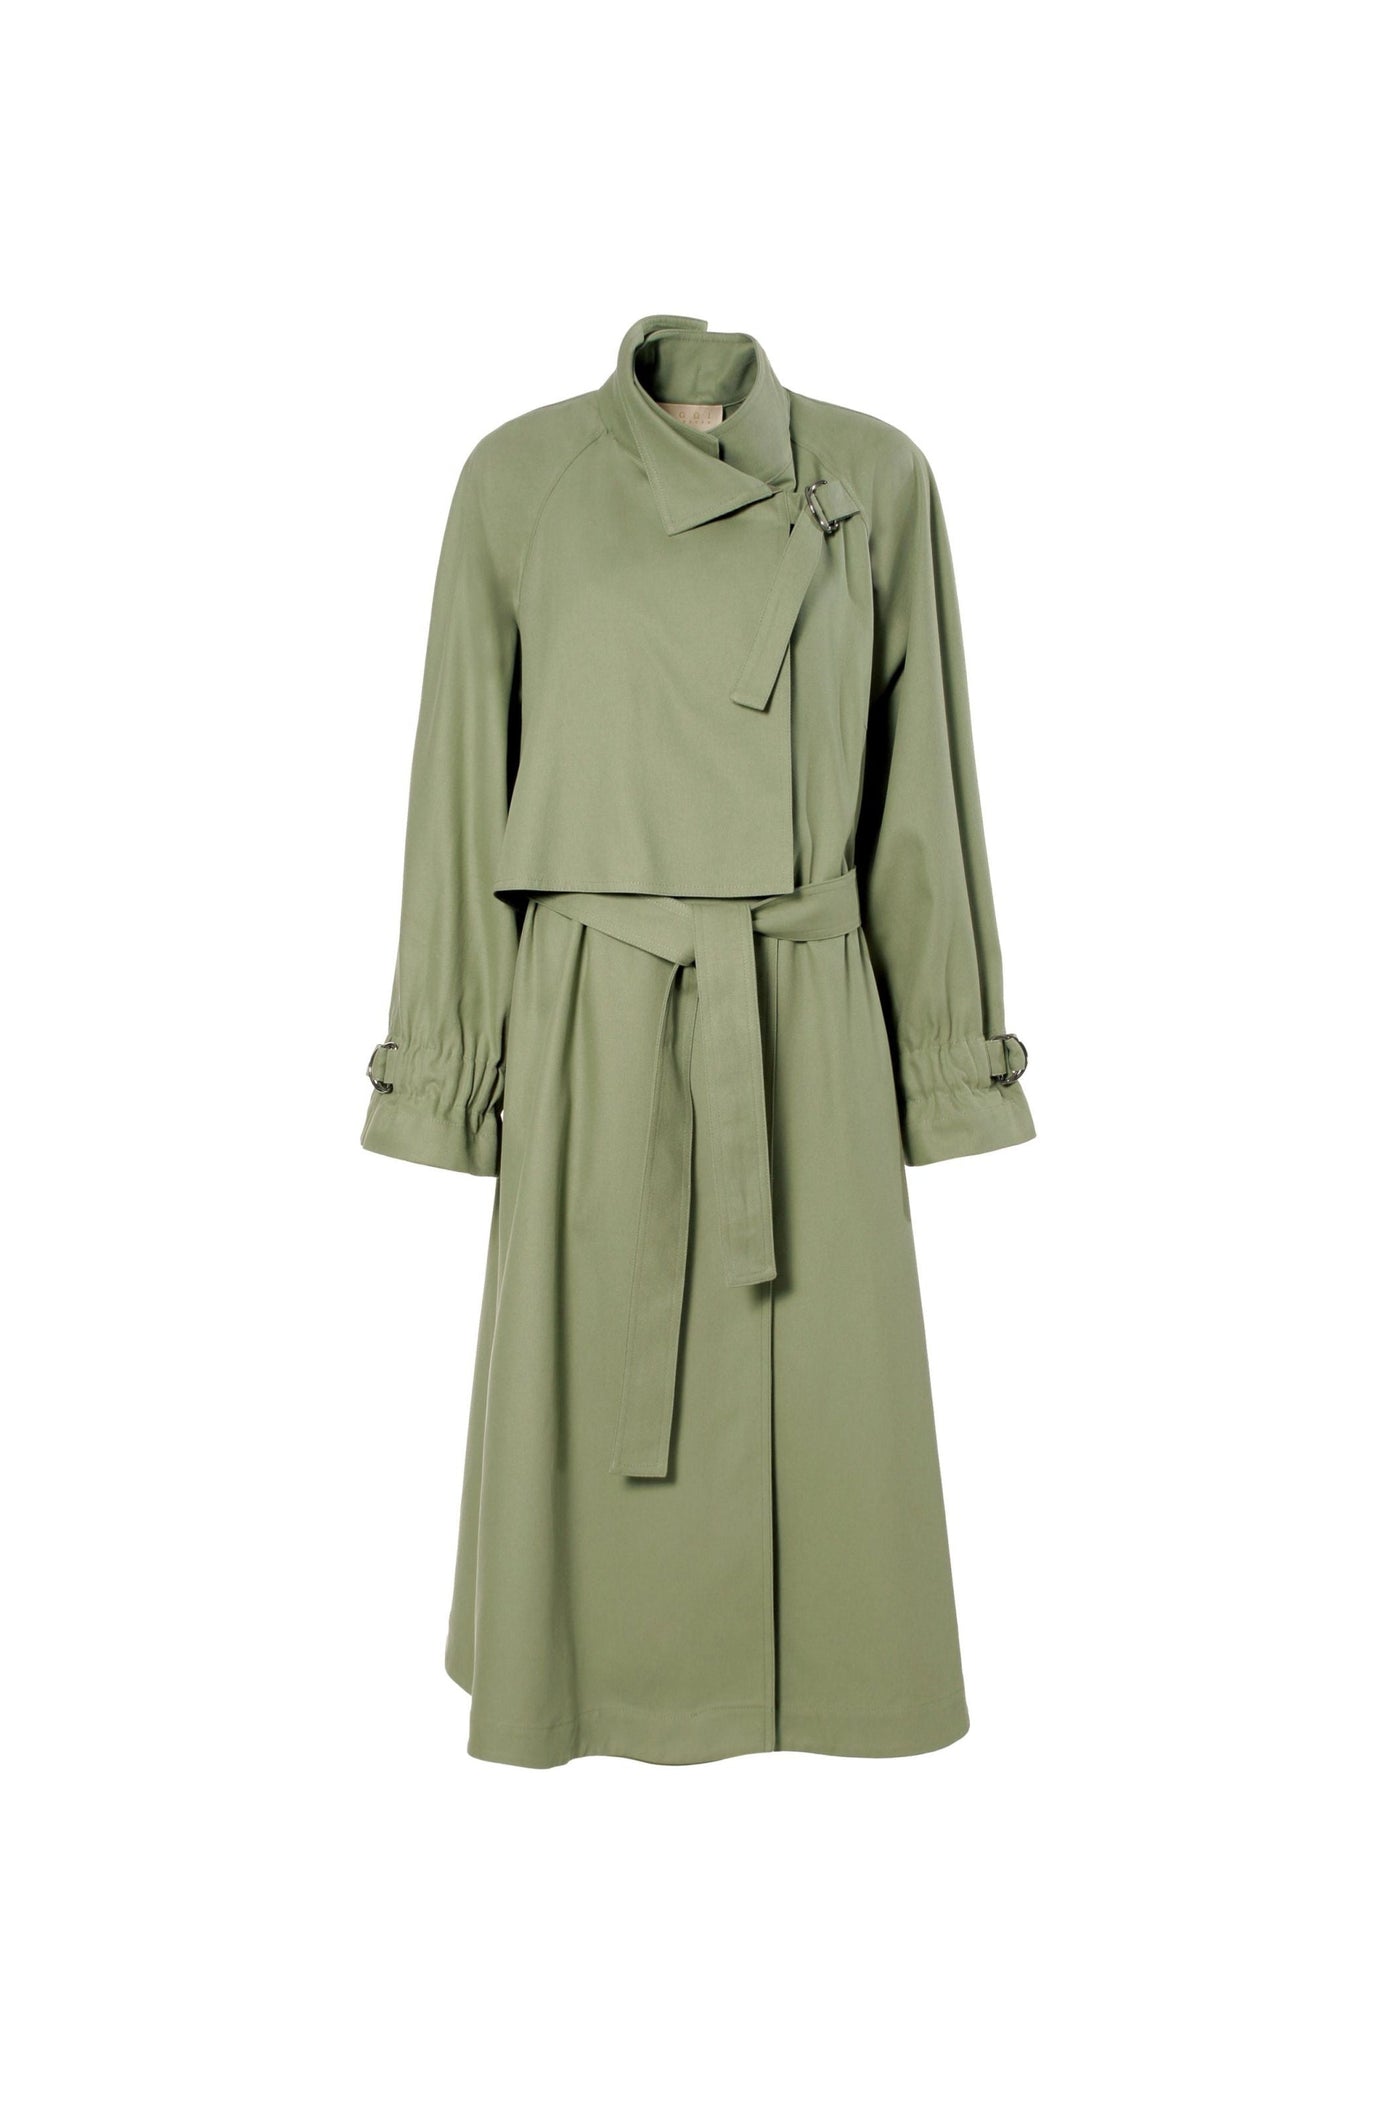 Rosemary Sage Green Trench Coat